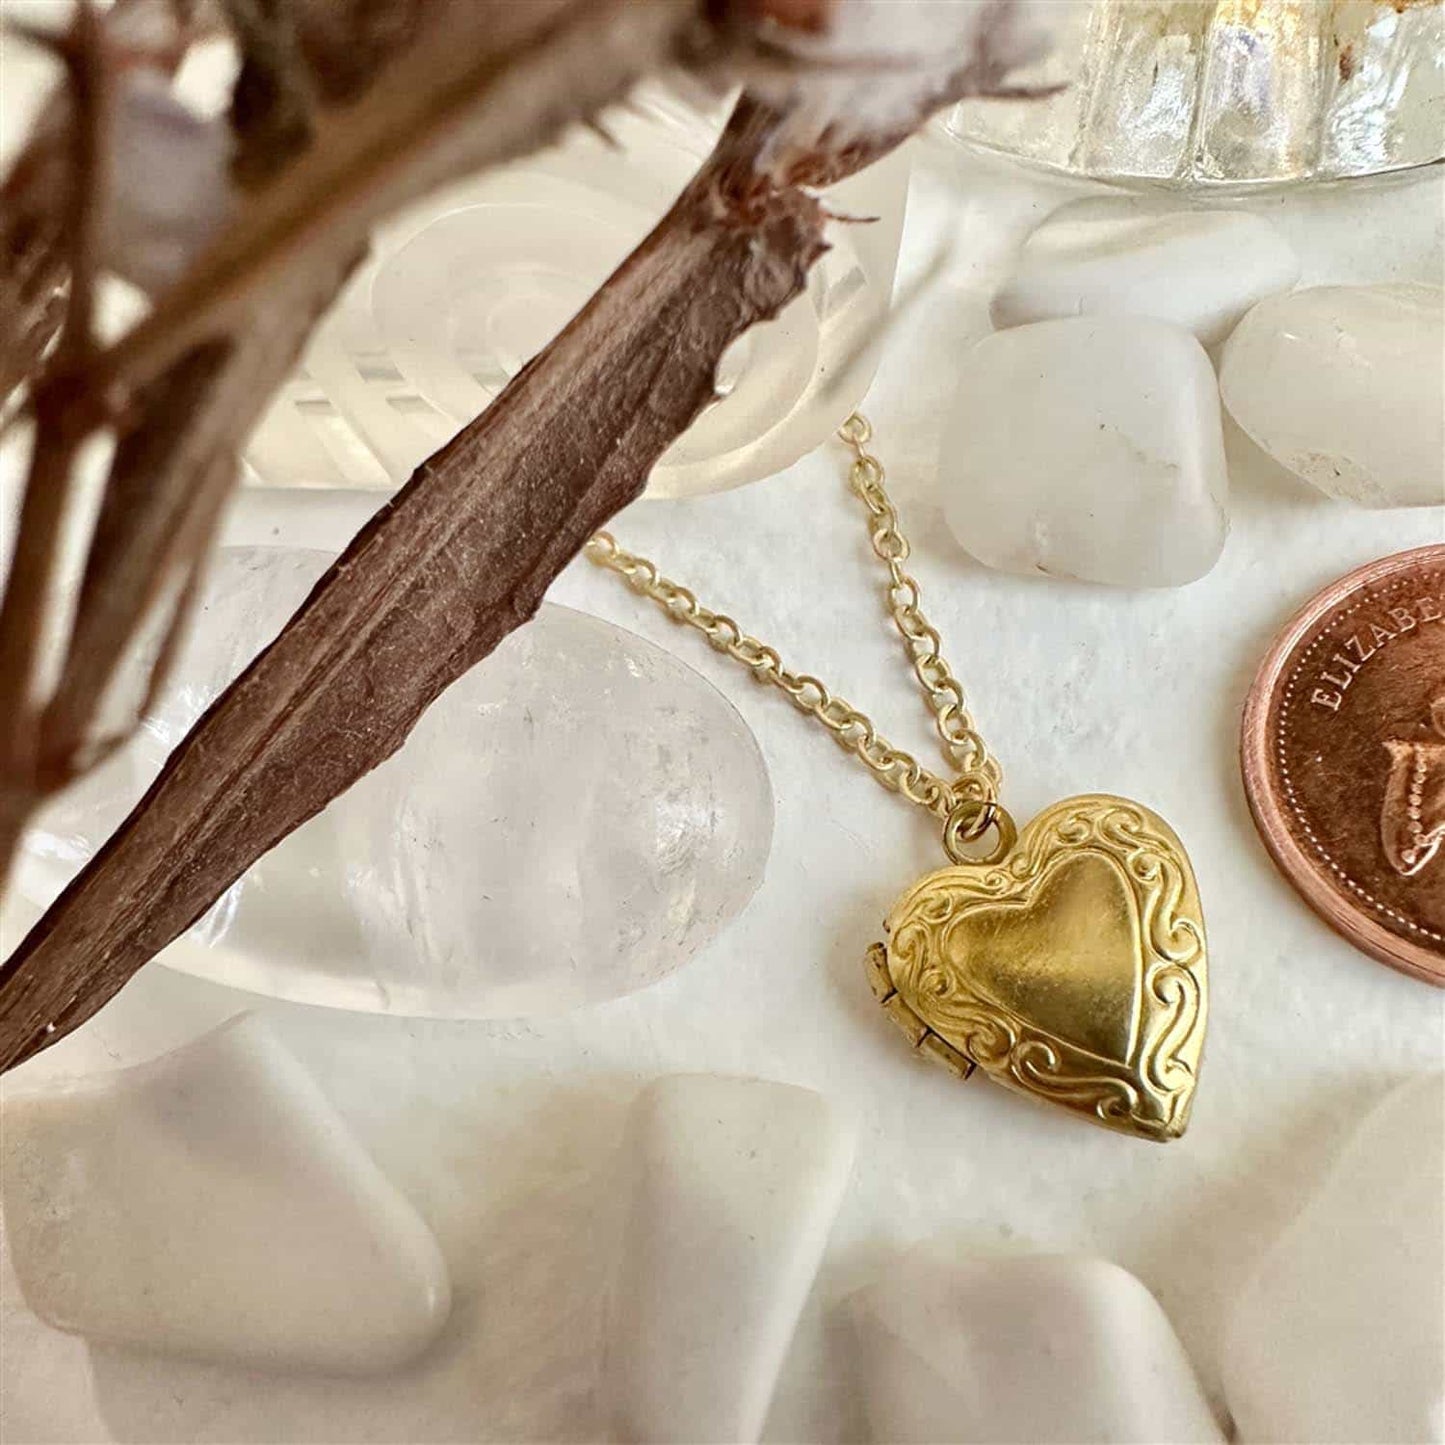 Elizabeth Vintage Heart Shaped Locket Charm Necklace in Raw Brass